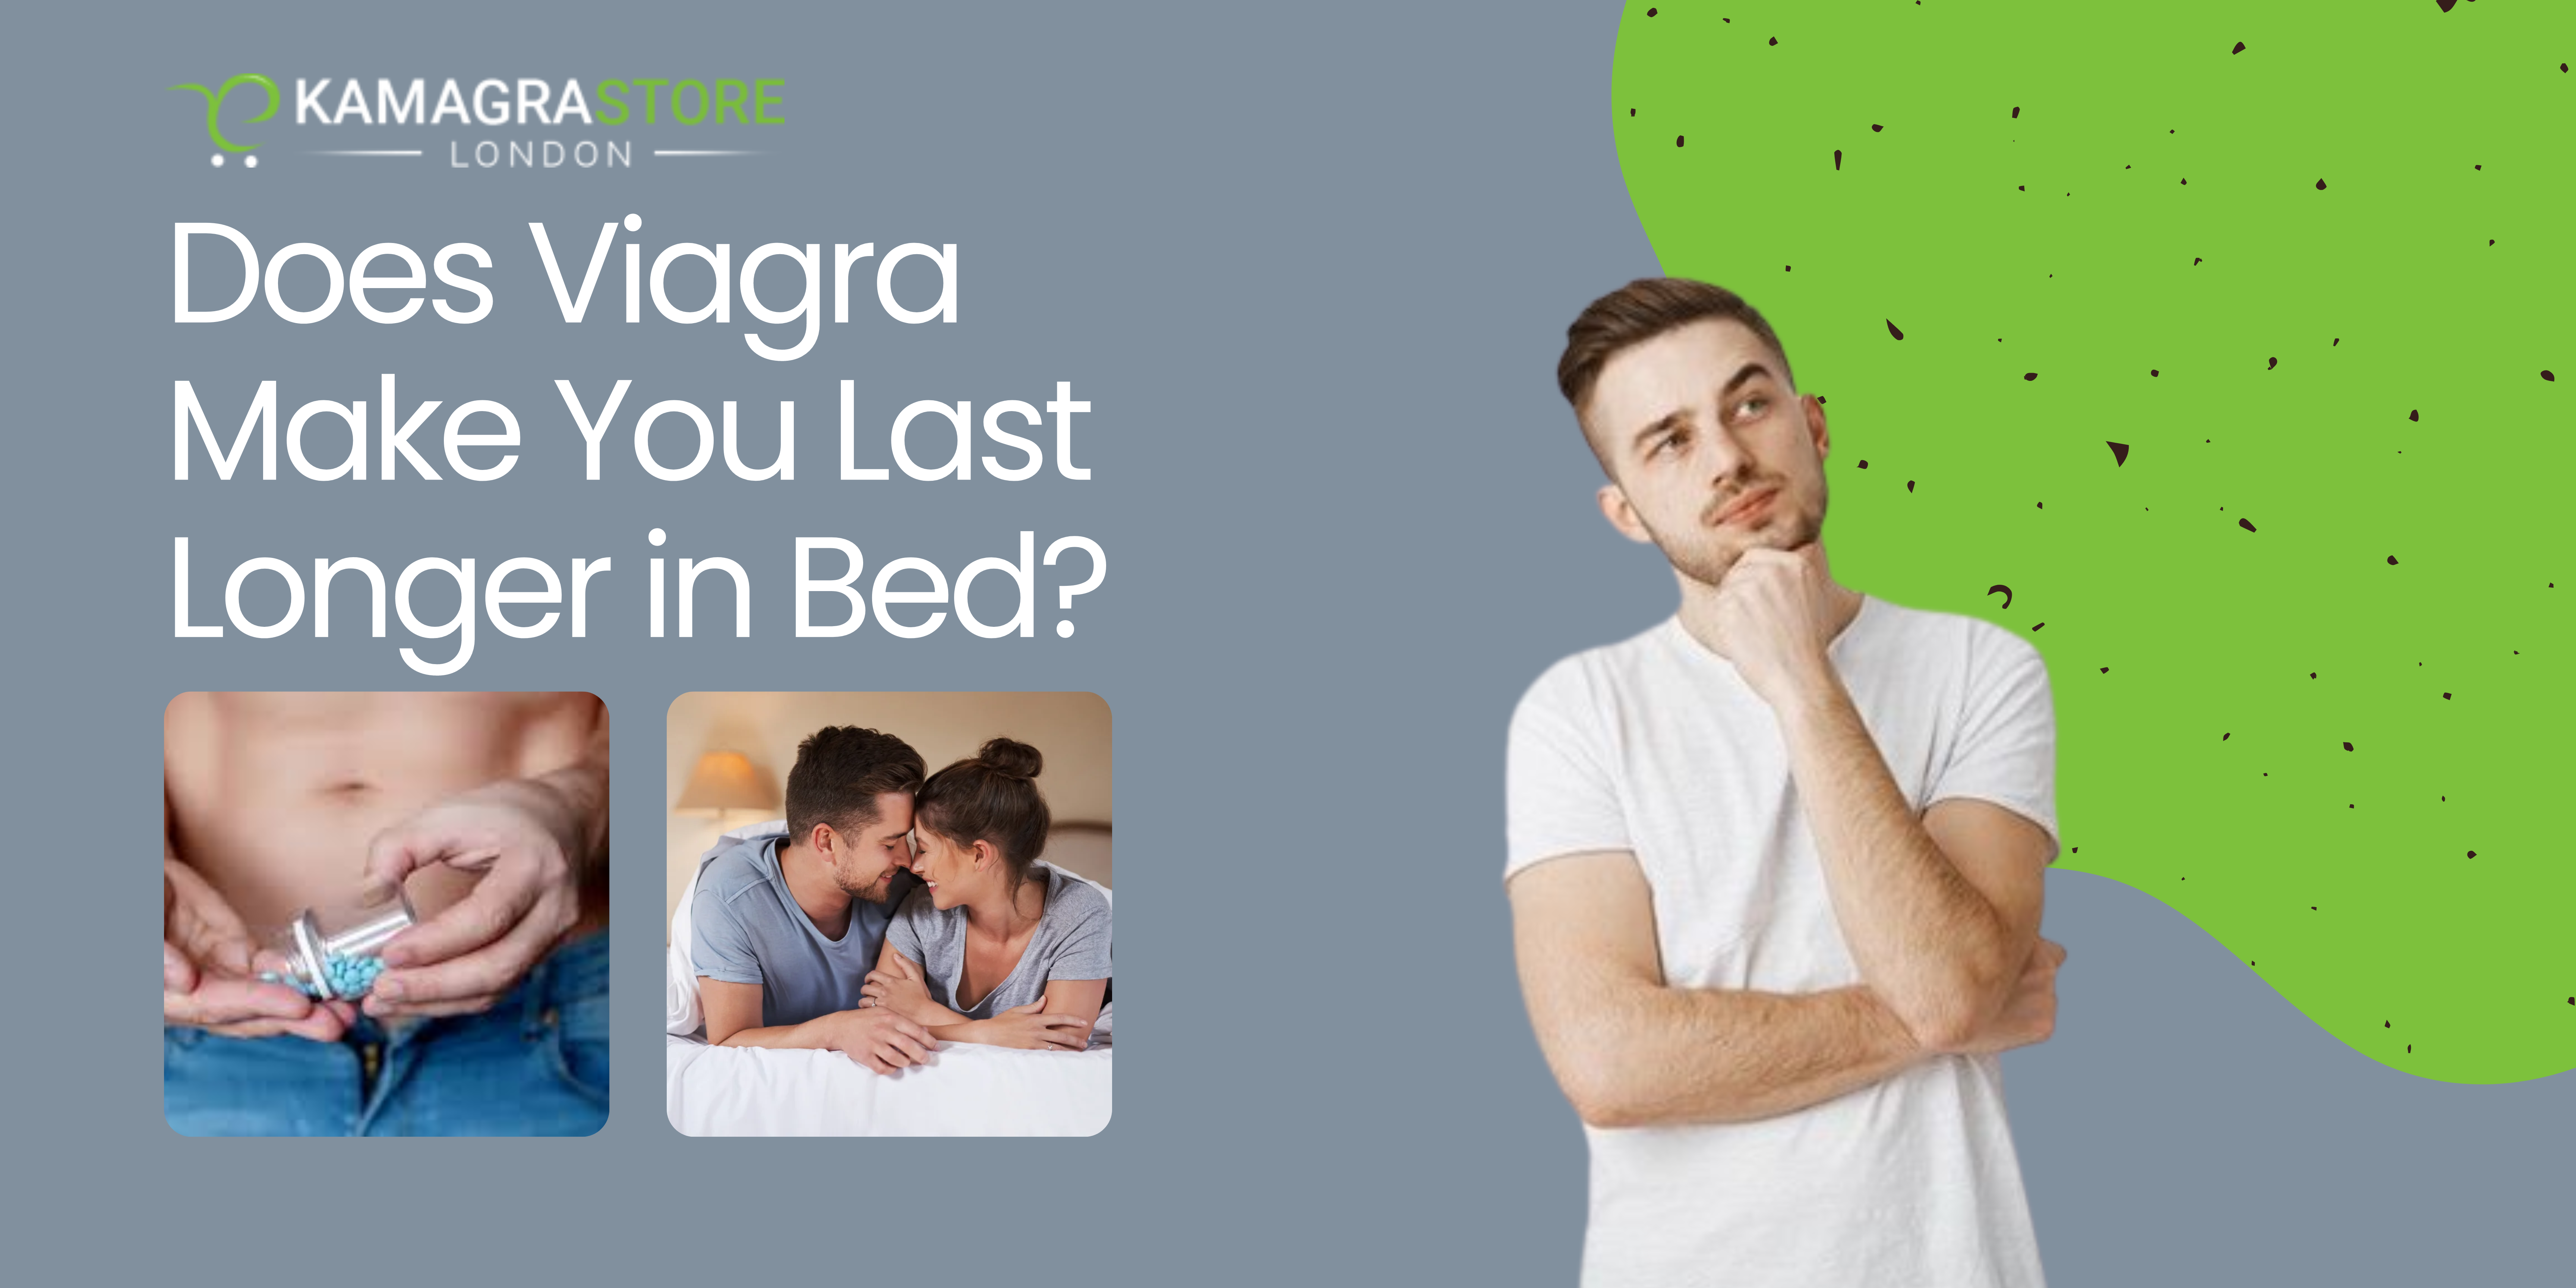 Does Viagra Make You Last Longer in Bed?